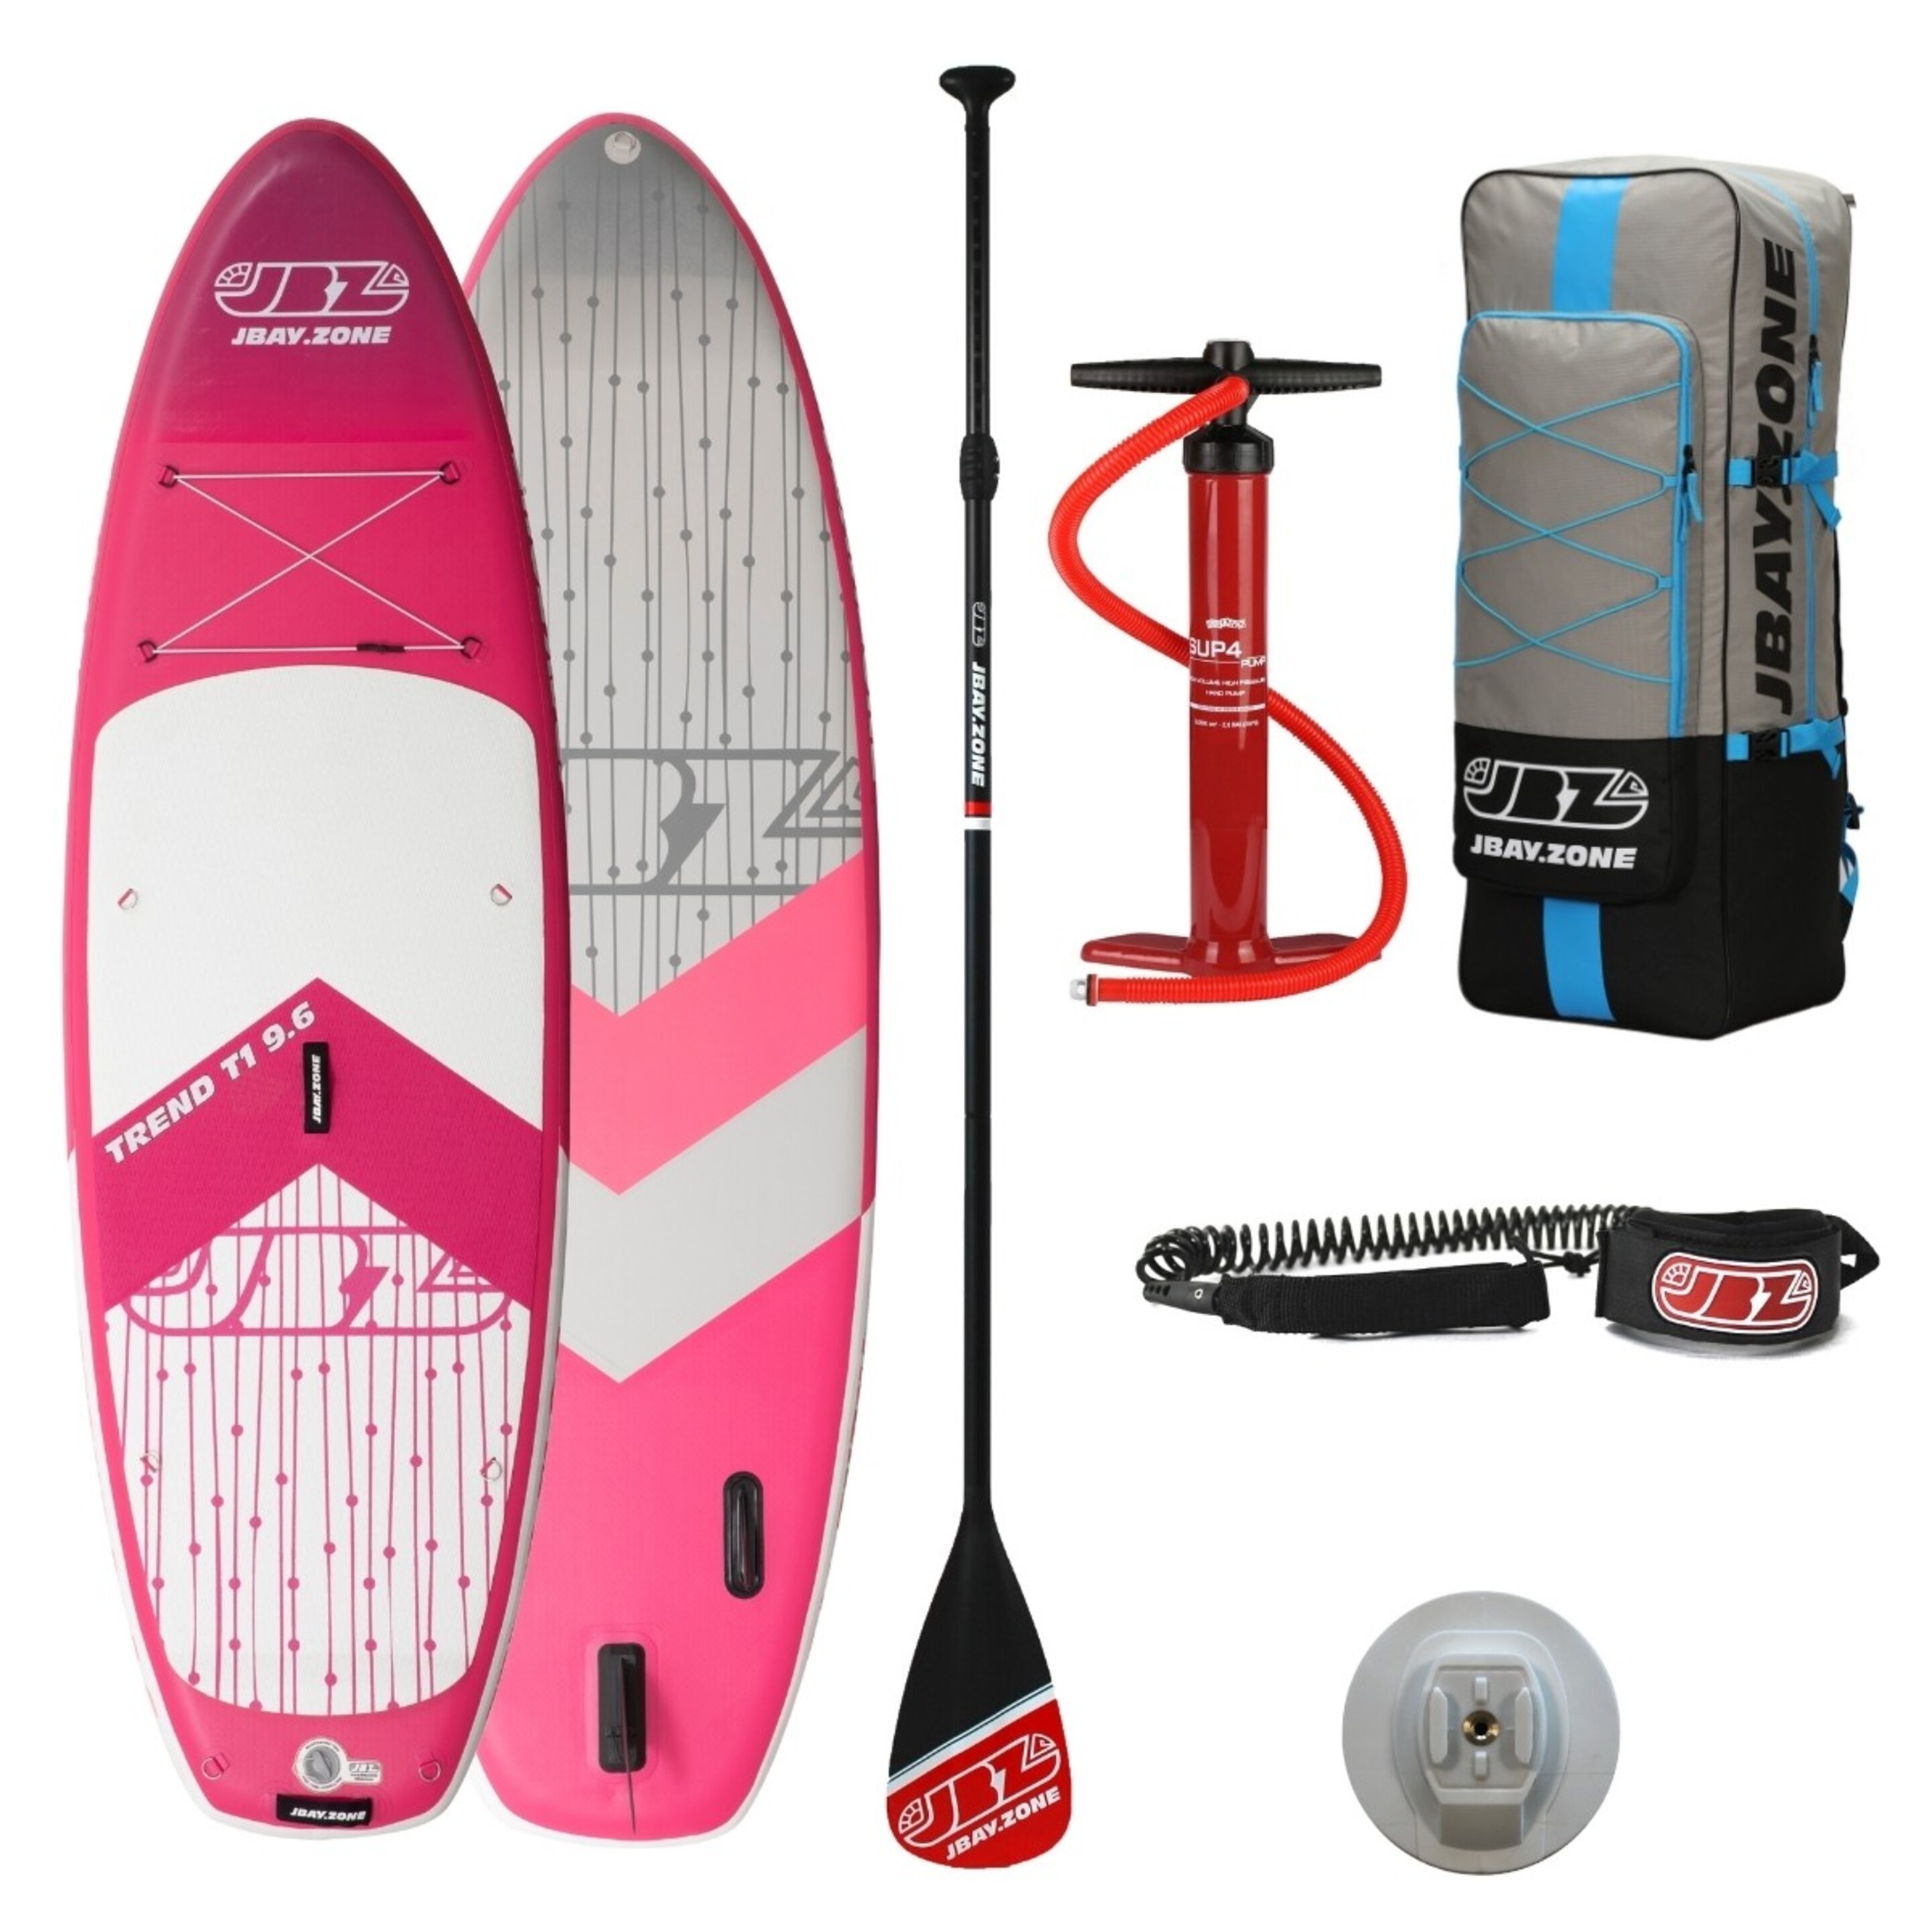 Tabla De Stand Up Paddle Surf Sup Hinchable Jbay.zone Modelo Trend T1 - Rosa/Rosa Claro  MKP